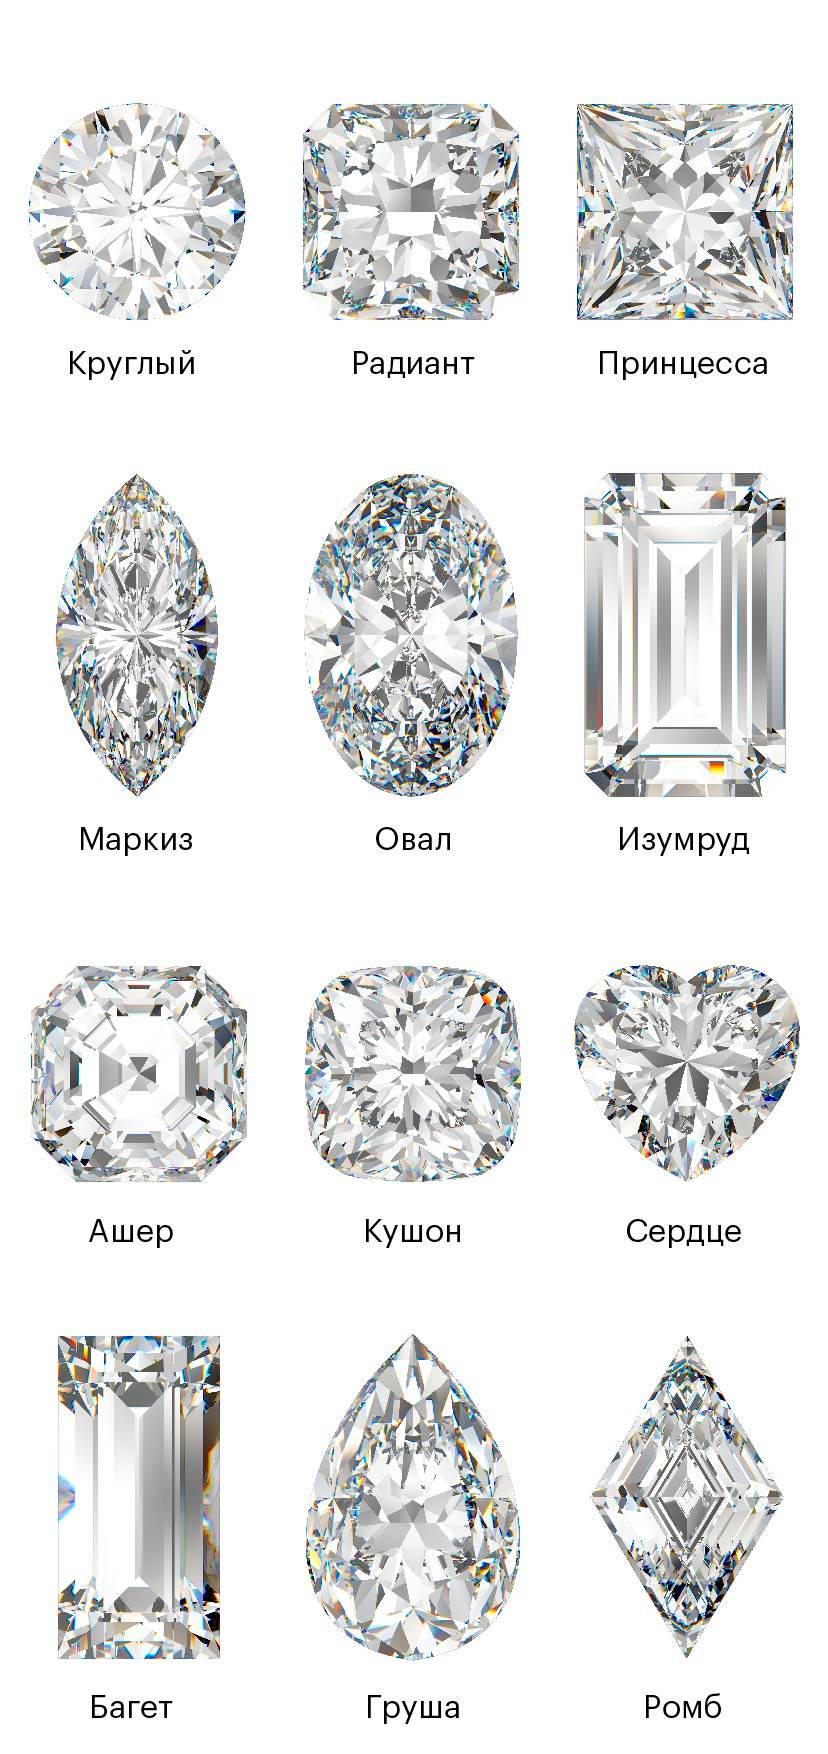 Варианты огранки алмазов. Источник: Shutterstock